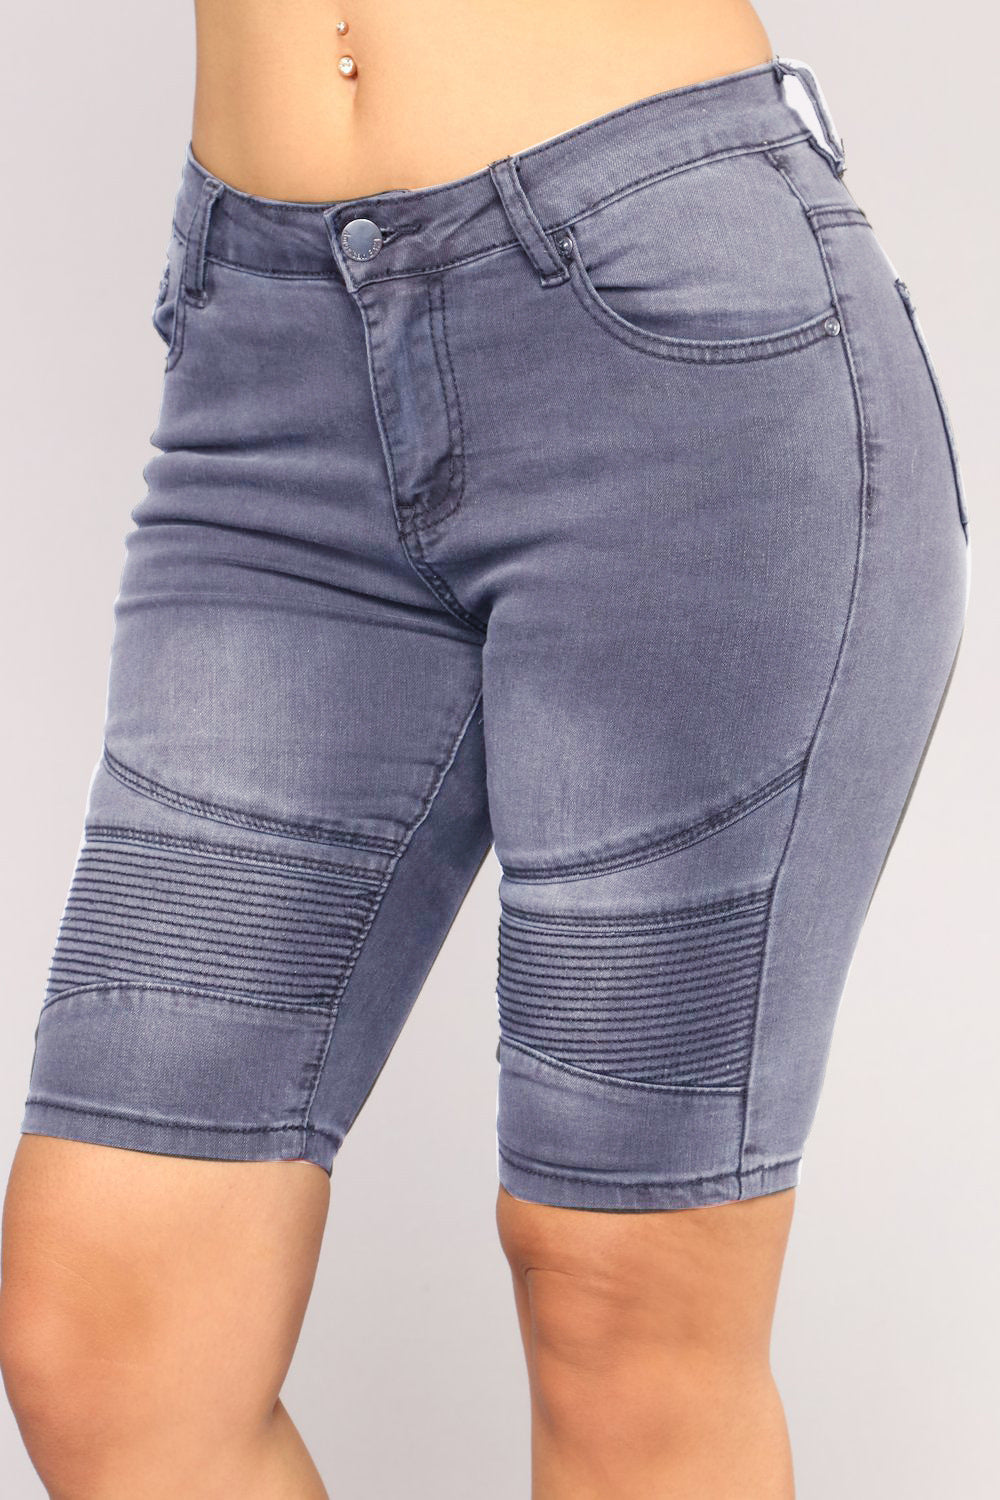 Temperamento comuta calça jeans de jeans esticada feminina